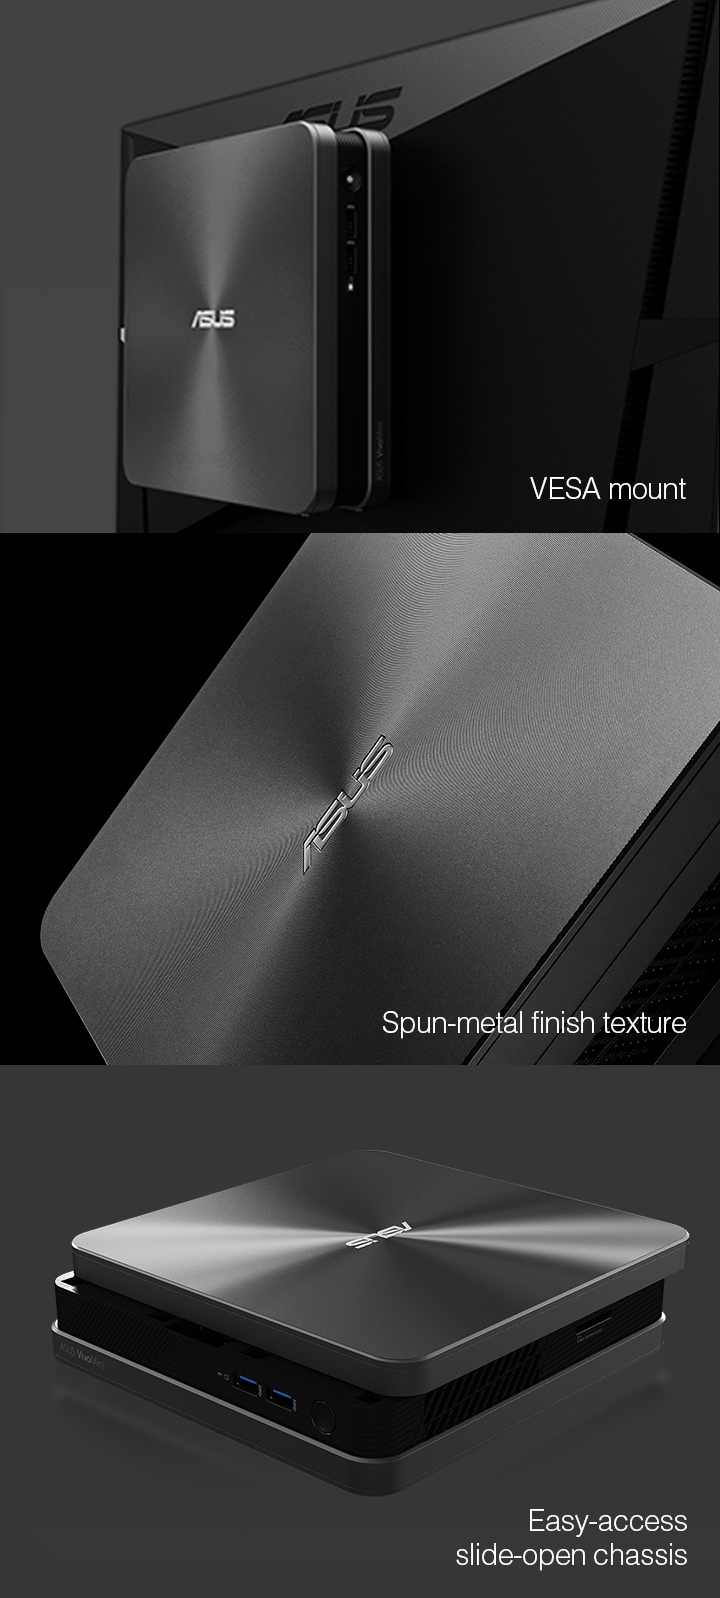 VESA mount, Spun-metal finish texture, Easy-access slide-open chassis